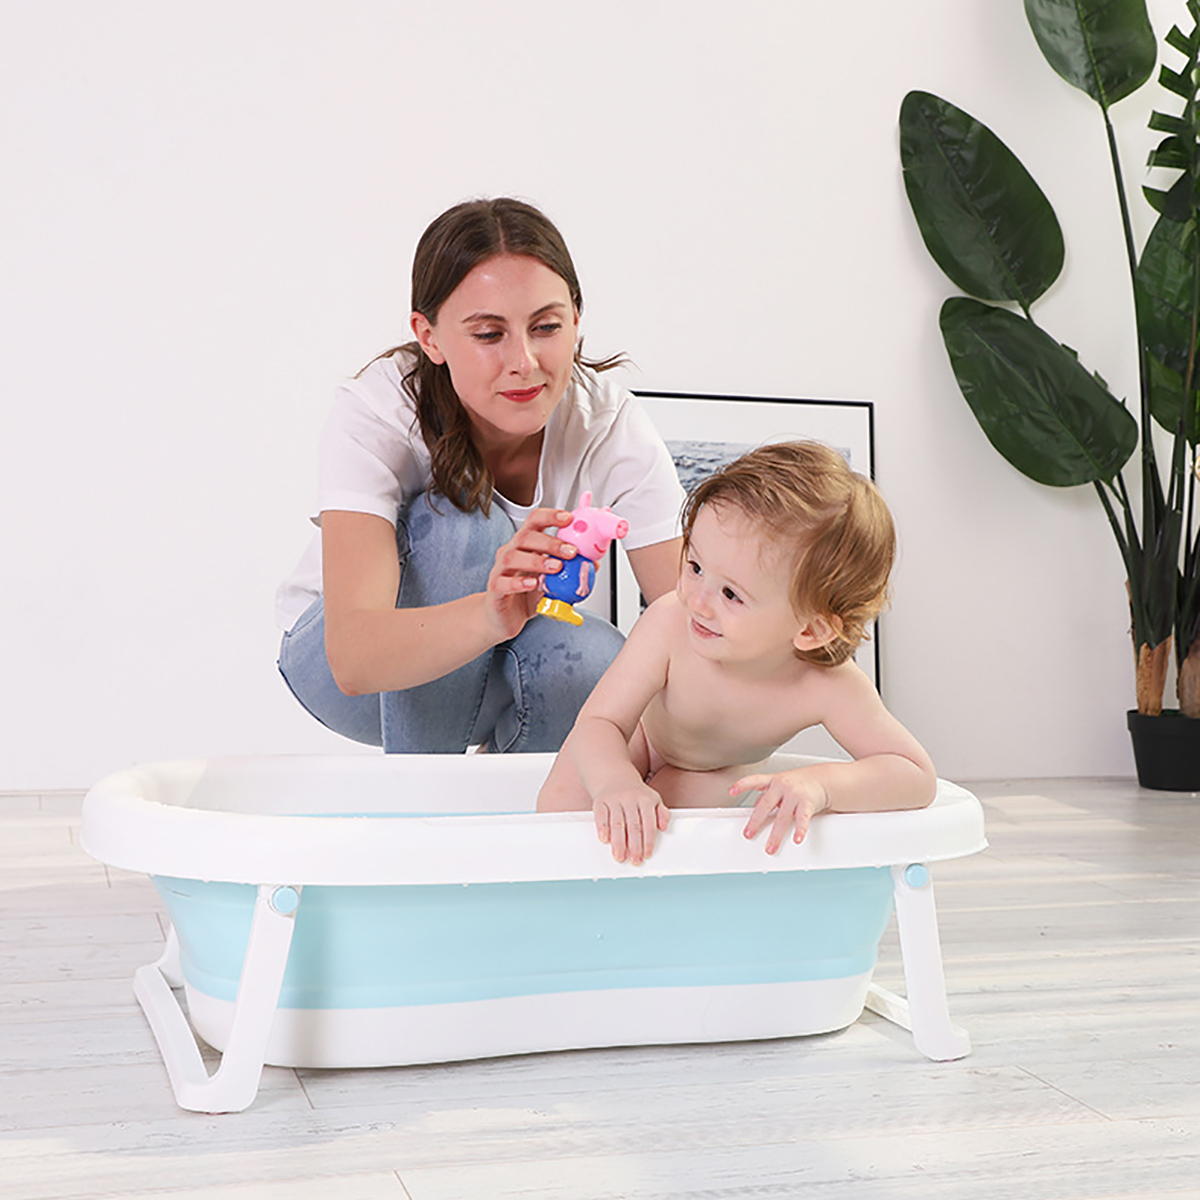 Baby-Tub-Children-Folding-Basin-Baby-Infant-Newborn-Supplies-Portable-Bathtub-7685CM-1571565-10